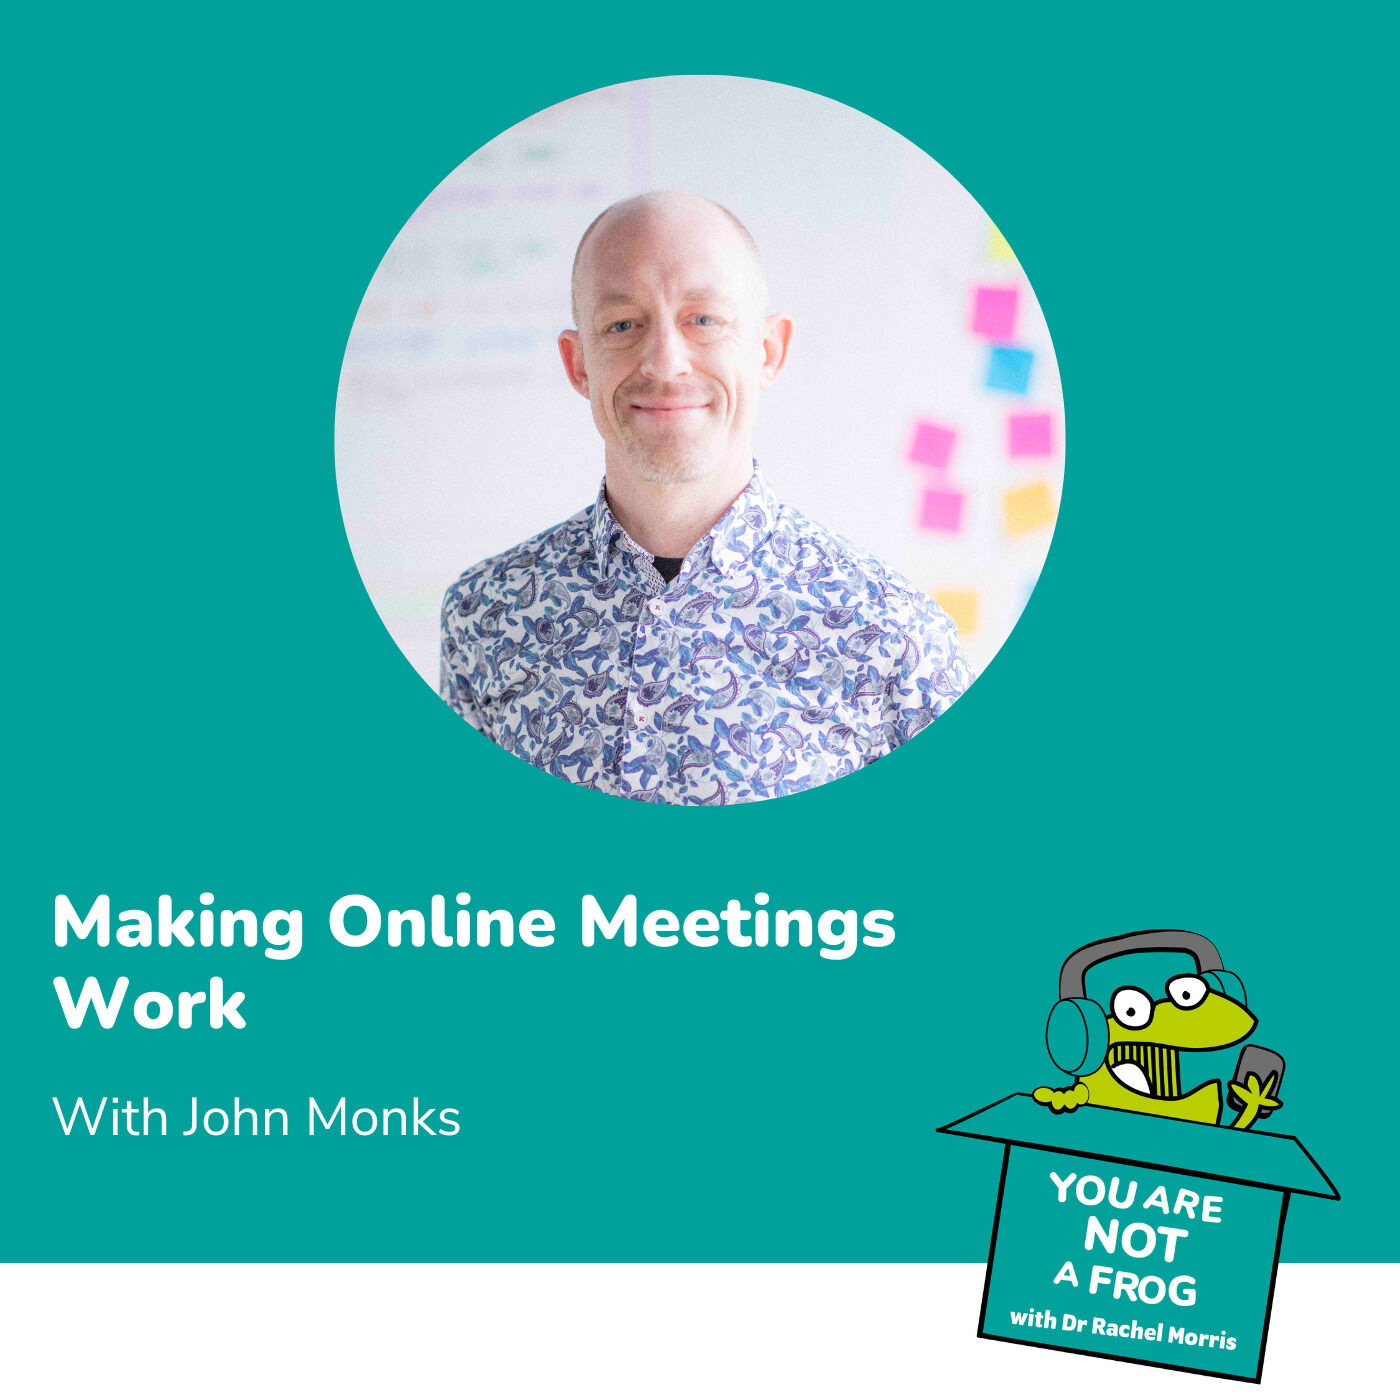 Making Online Meetings Work with John Monks